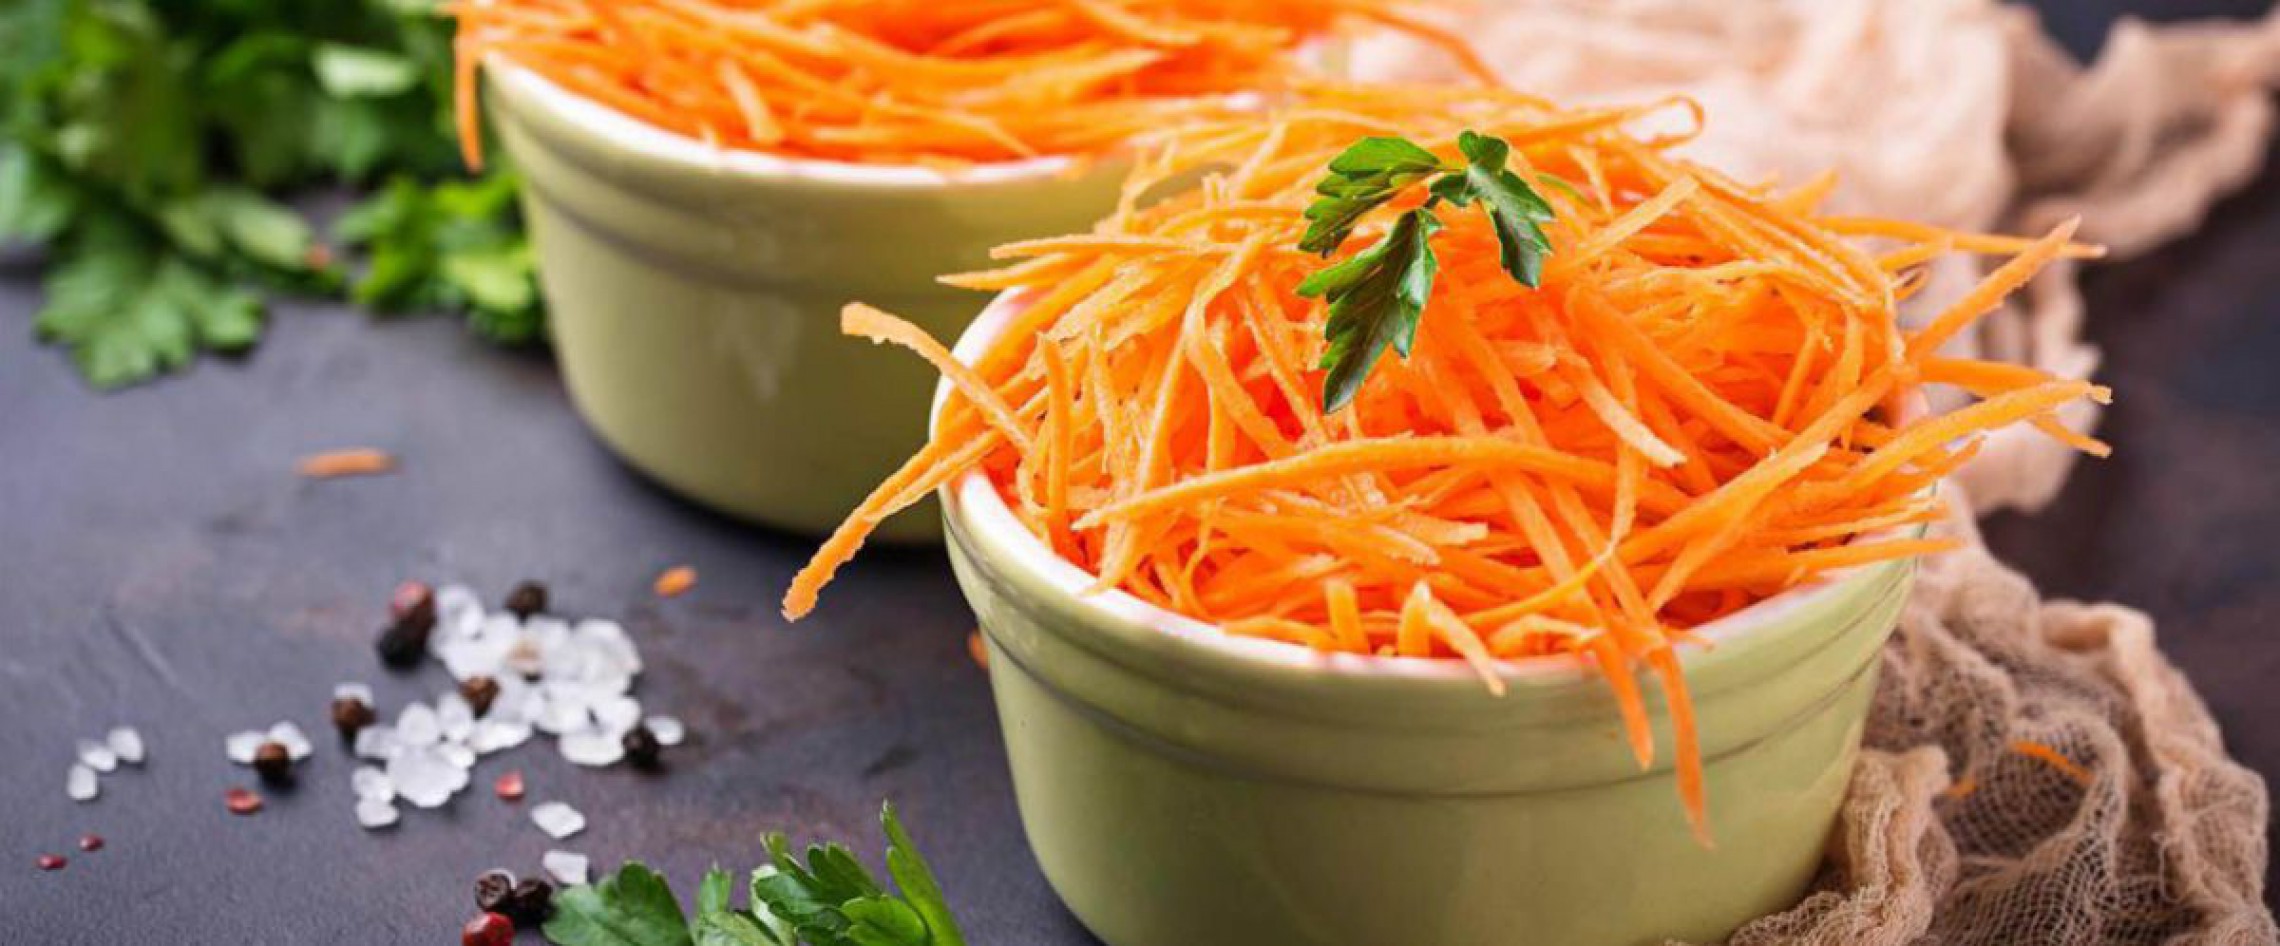 Karotten fein geschnitten zu einem Salat